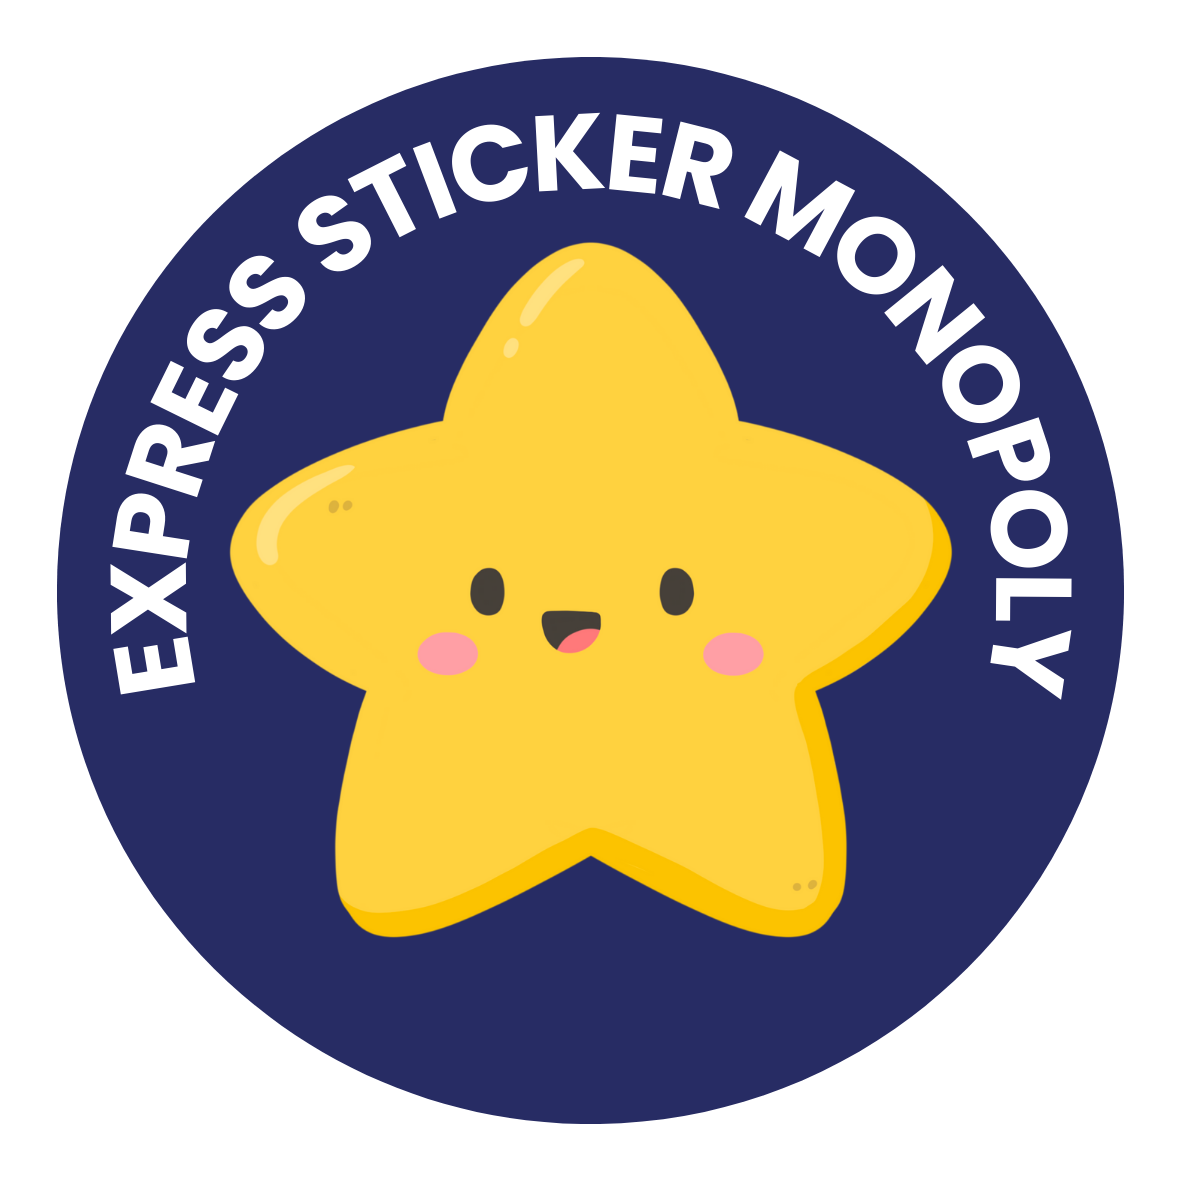 Express Sticker Monopoly